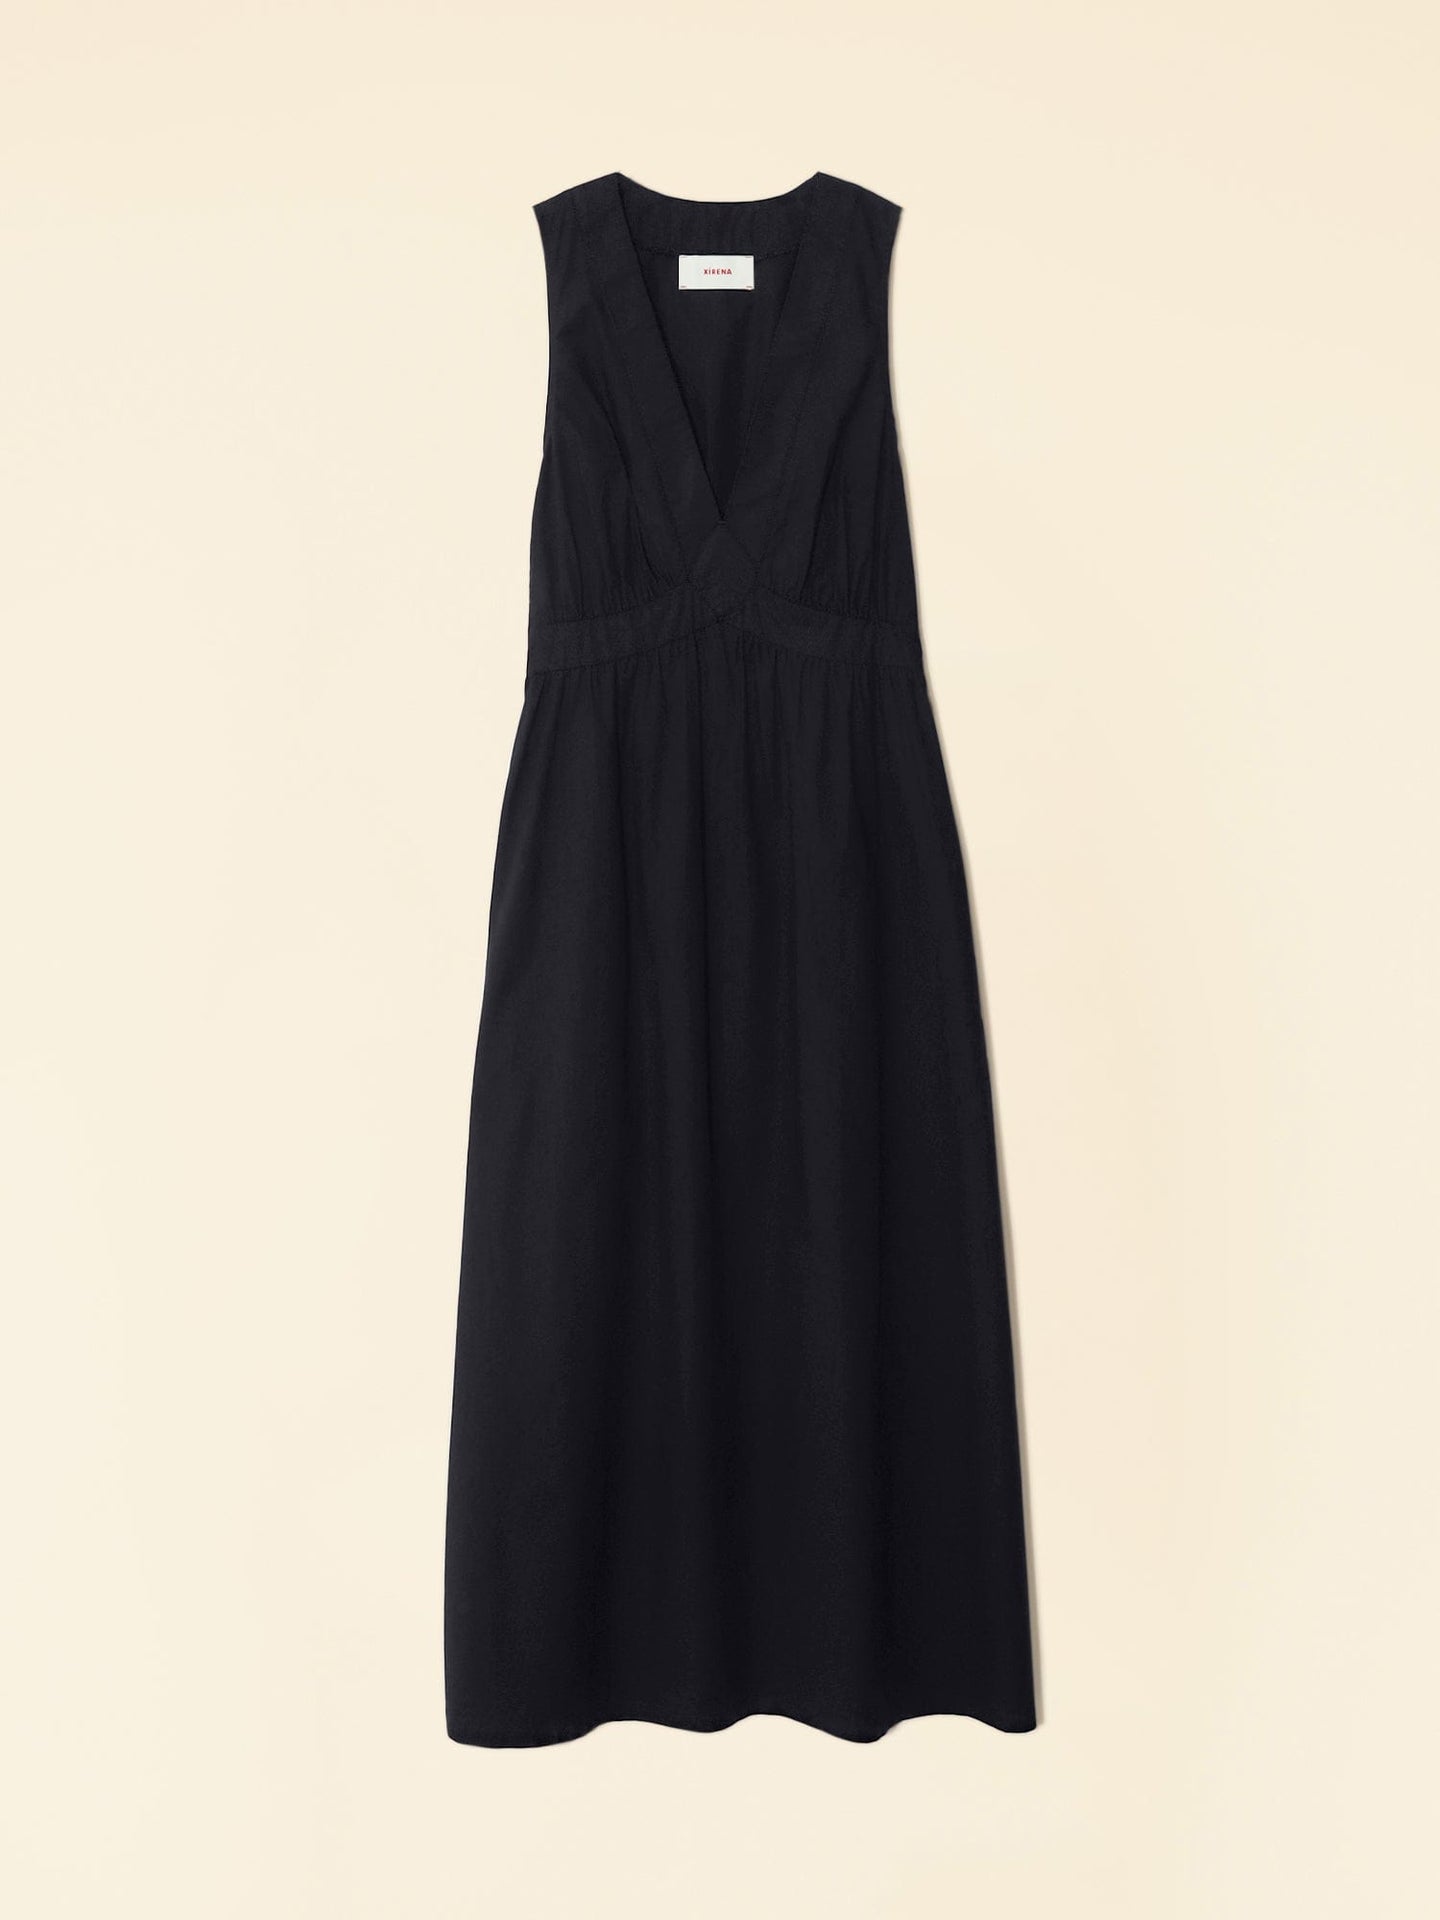 Xirena Dress Black Andy Dress